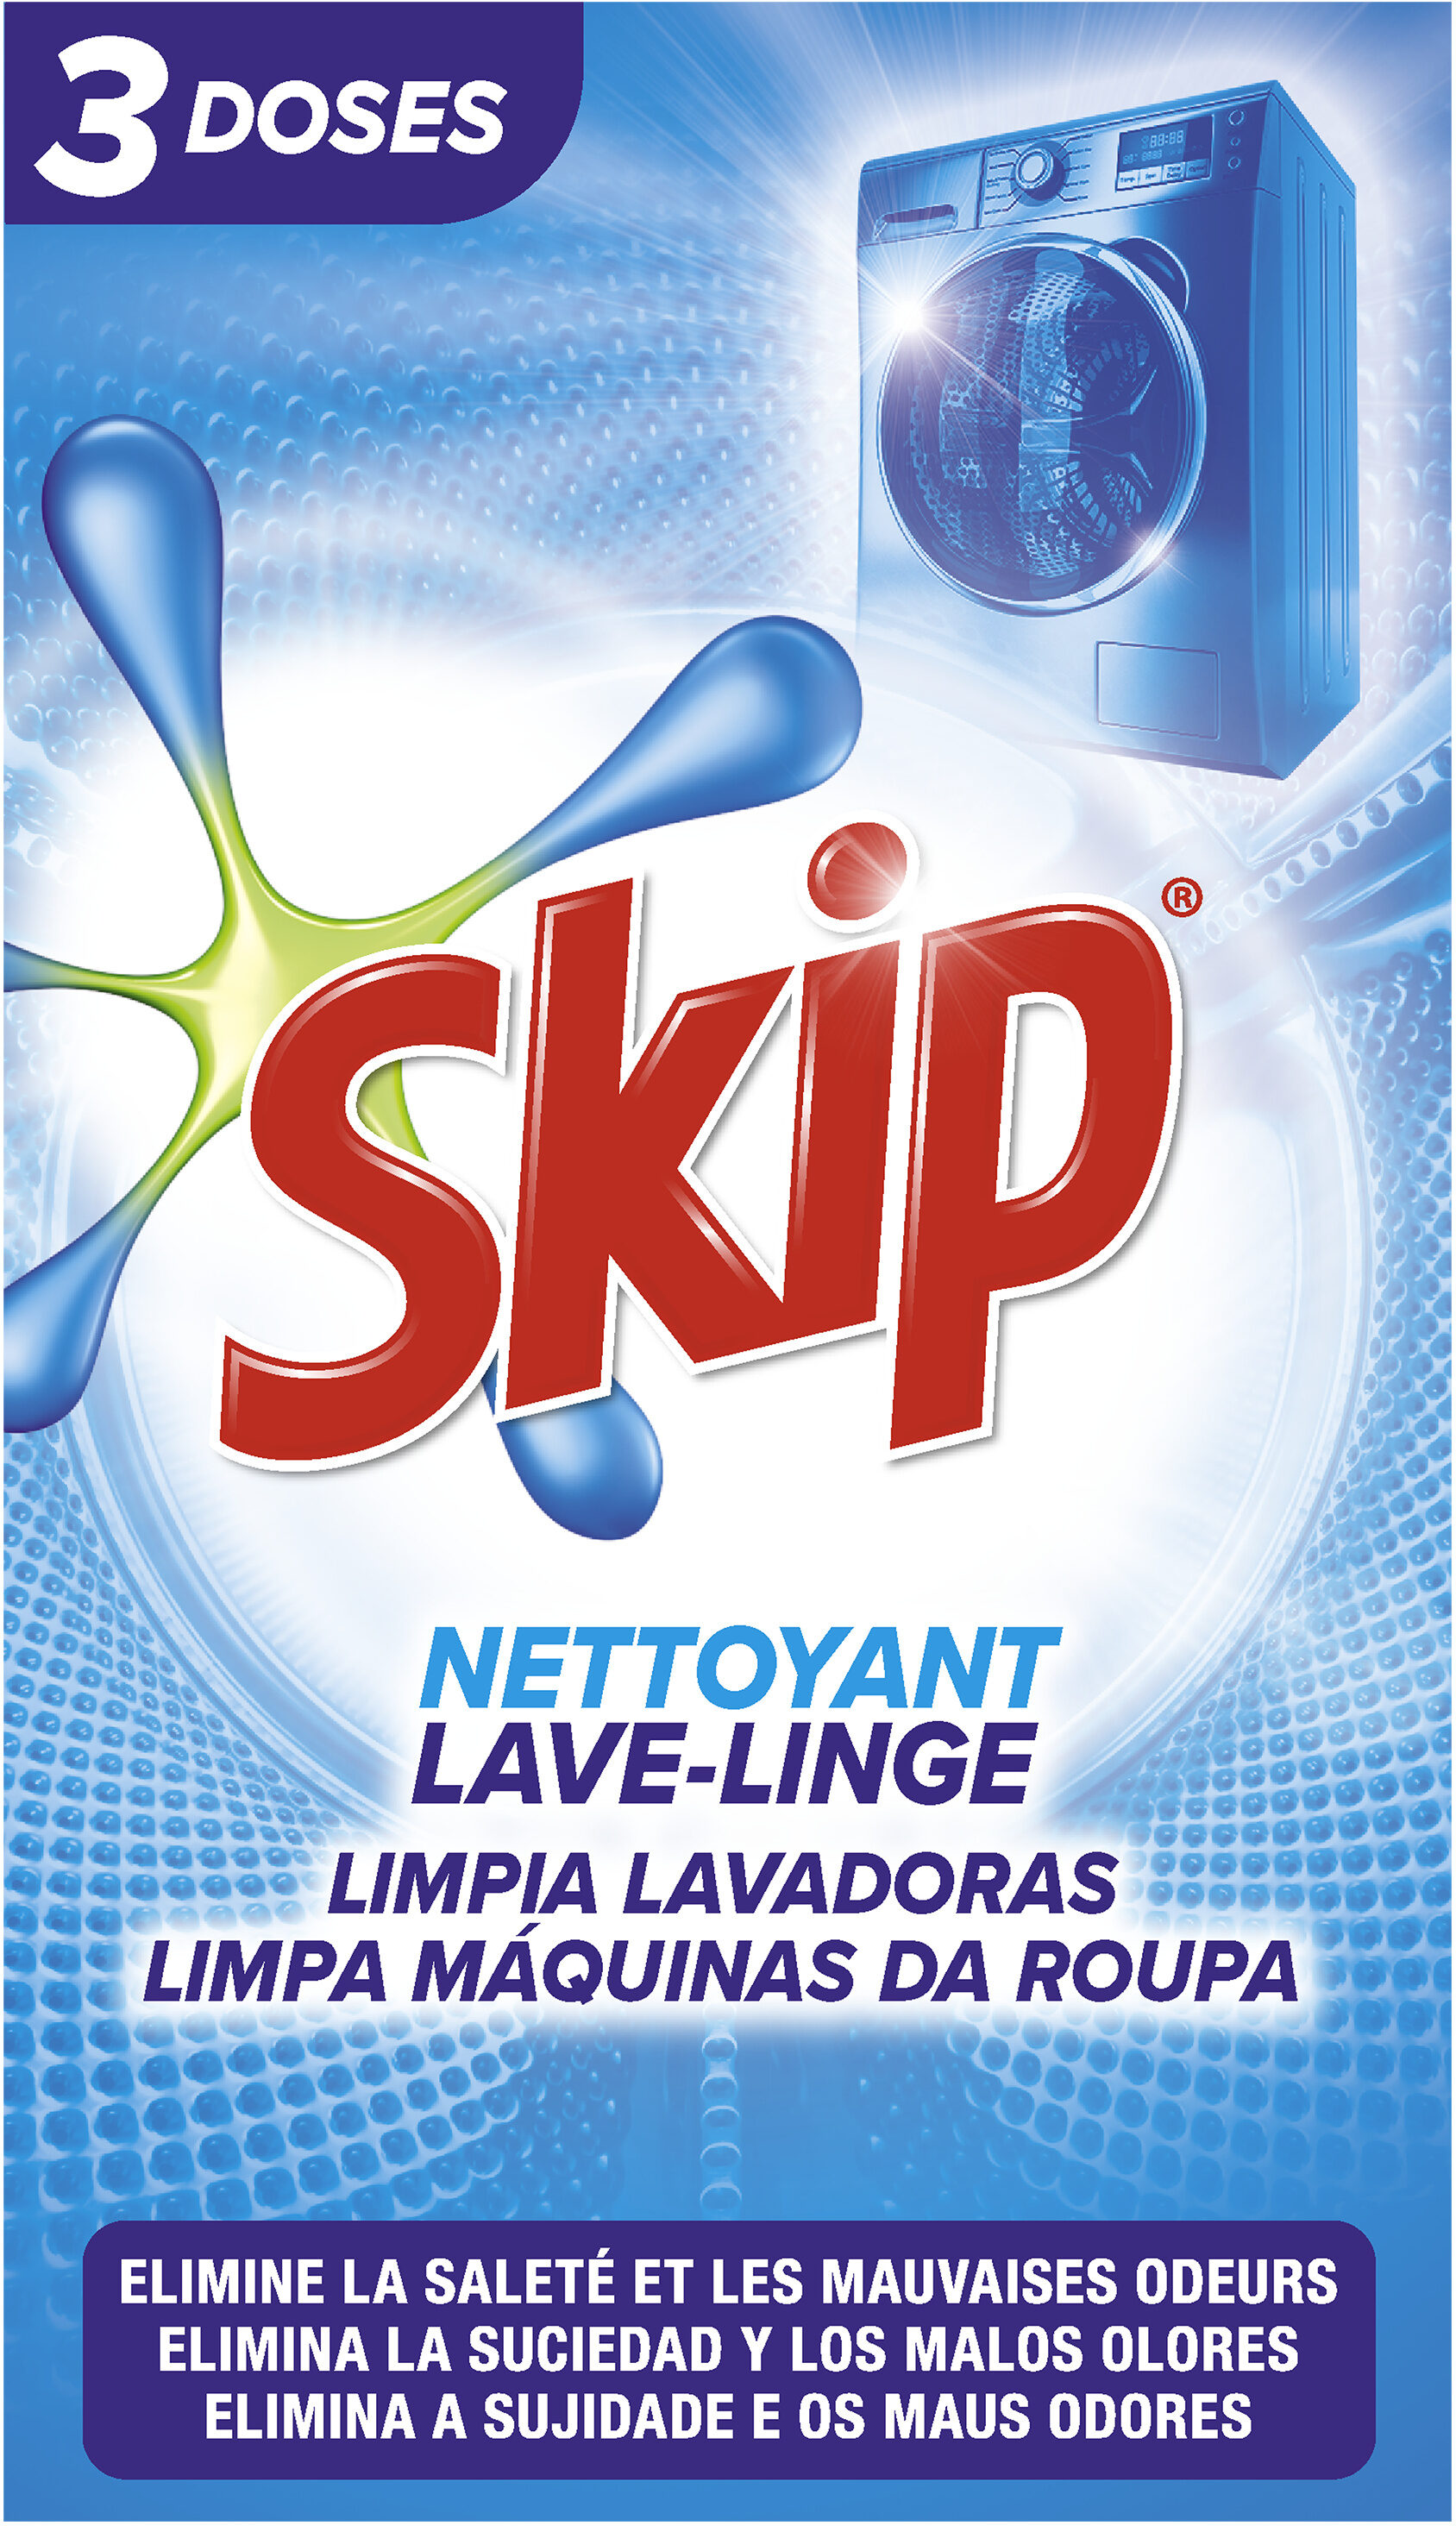 Skip Nettoyant Lave-Linge 3 Doses - Product - fr